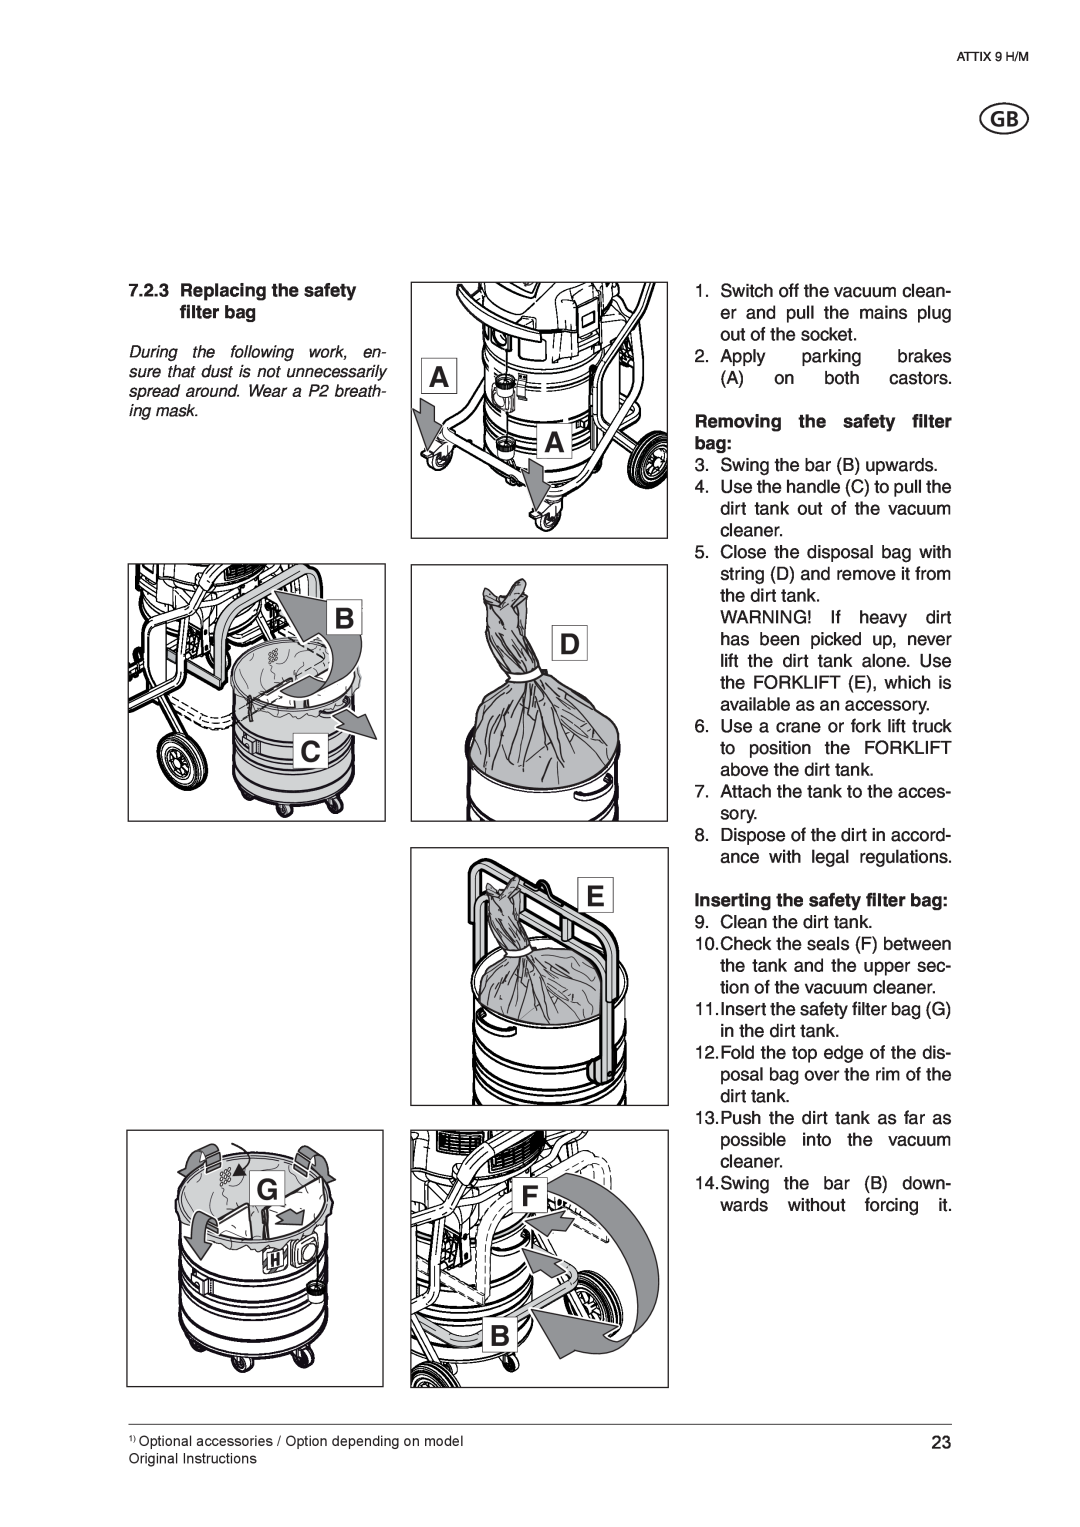 Nilfisk-ALTO ATTIX 965-2H/M SD XC manual 7.2.3Replacing the safety filter bag, Removing the safety filter bag 